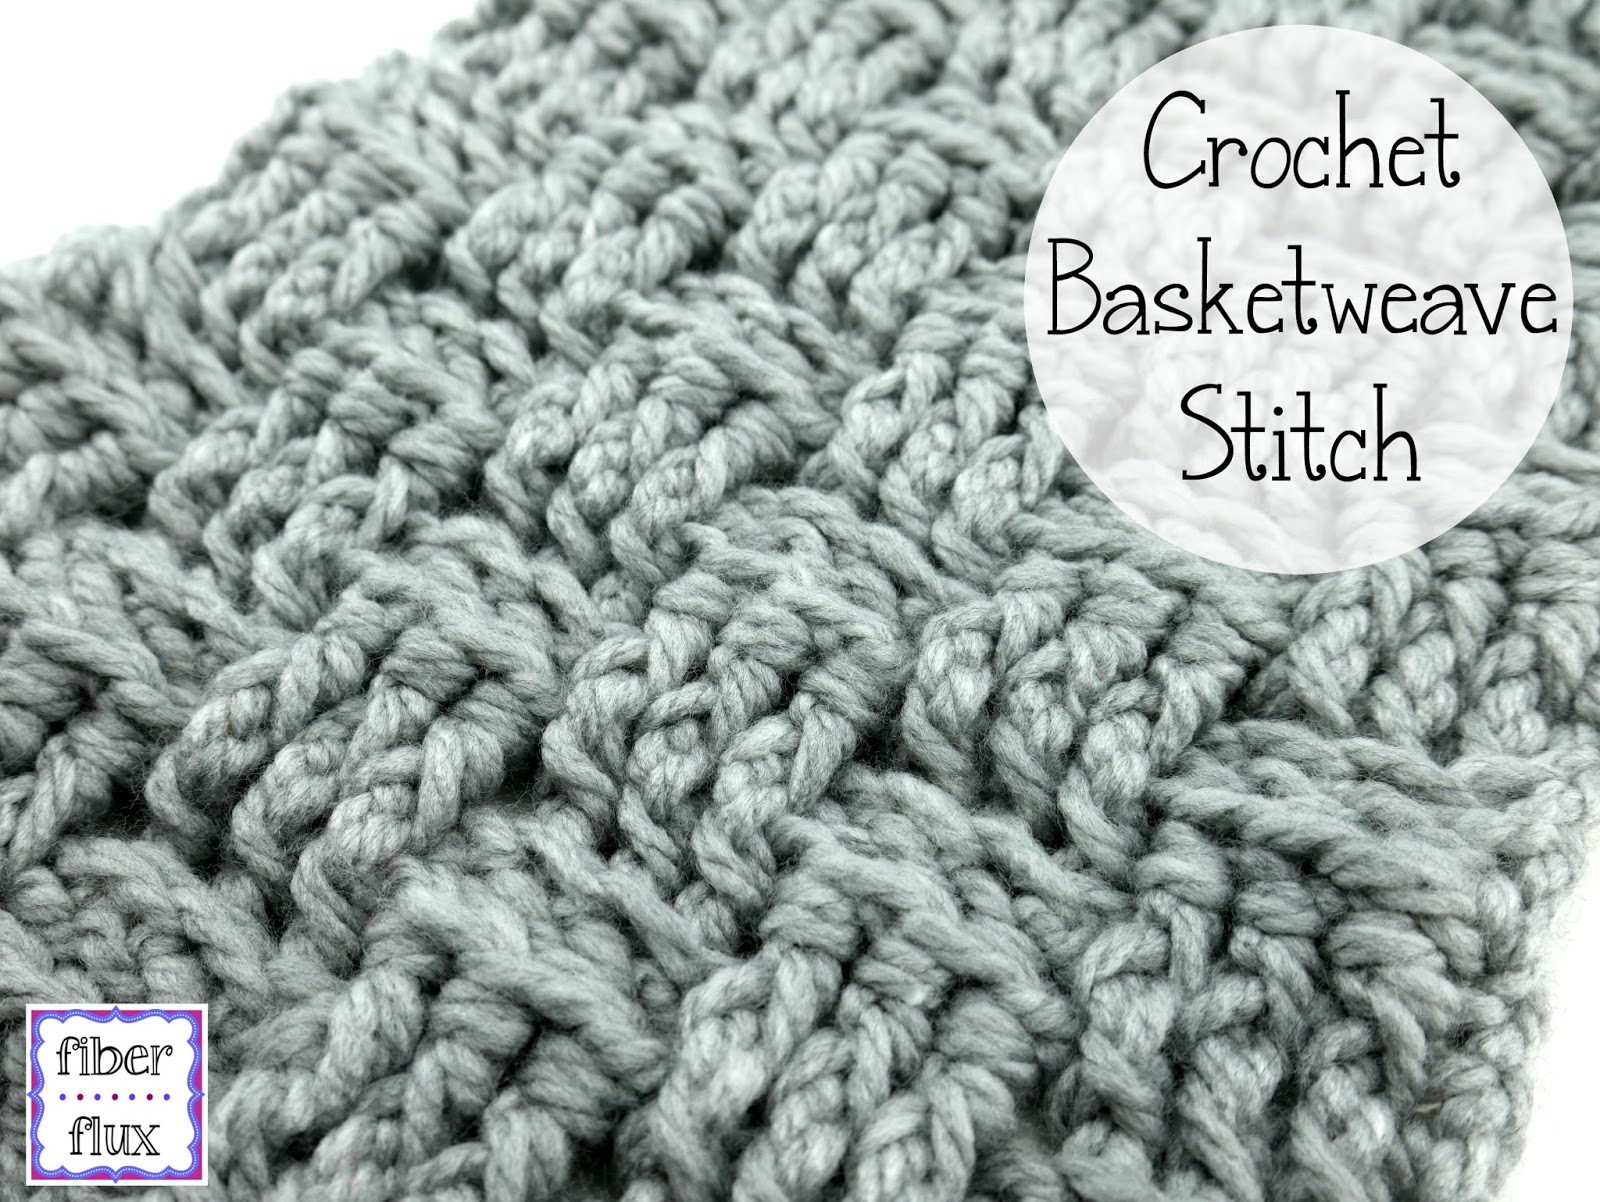 Fiber Flux: How To Crochet the Basketweave Stitch